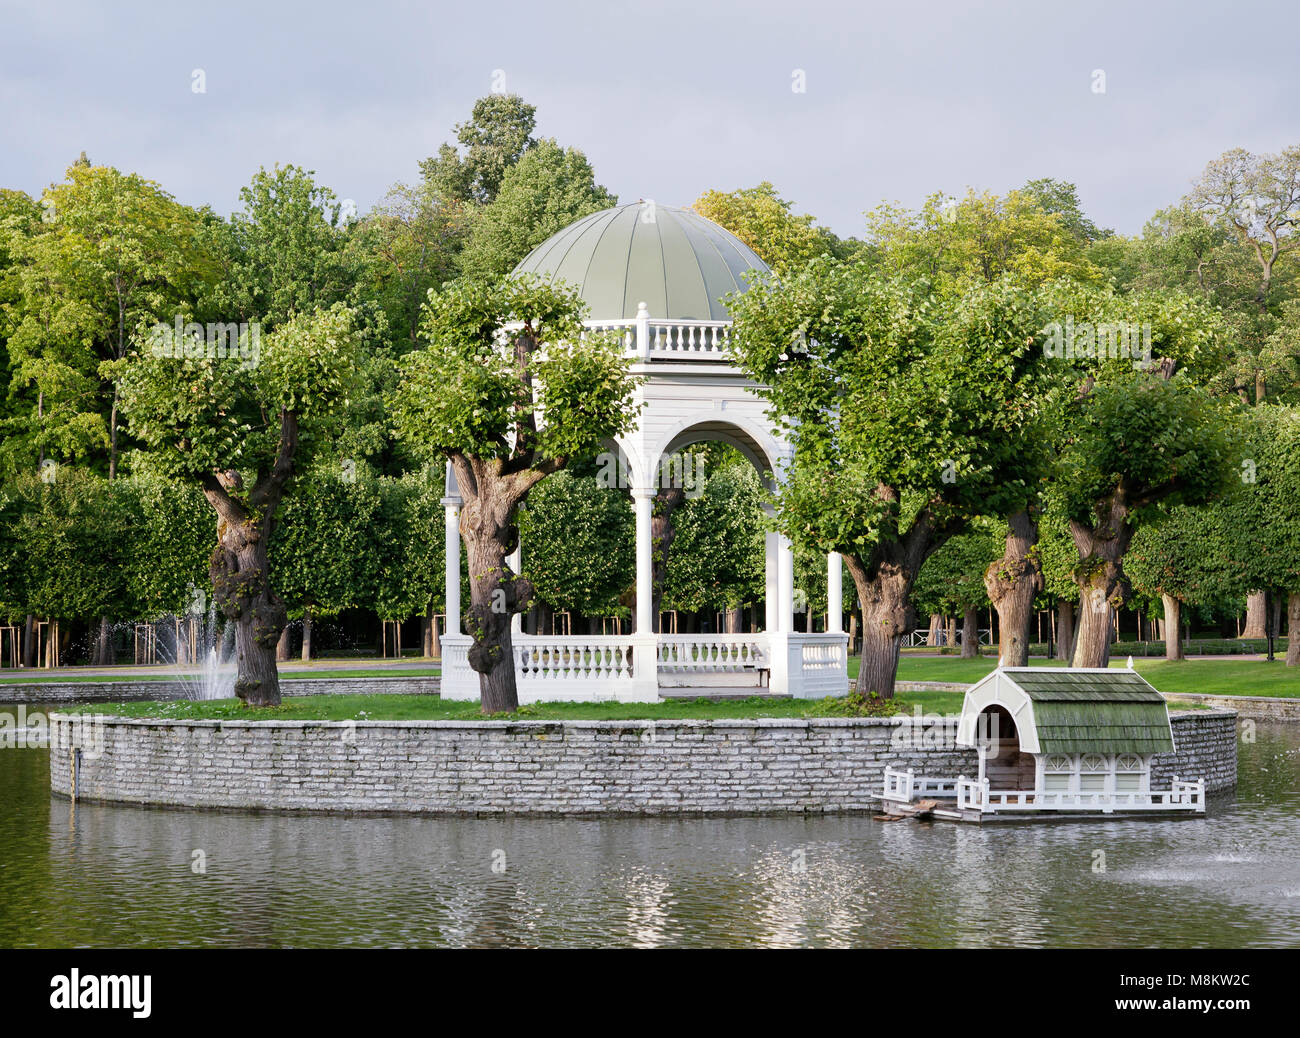 Pond with gazebo in Kadriorg park, Tallinn Stock Photo